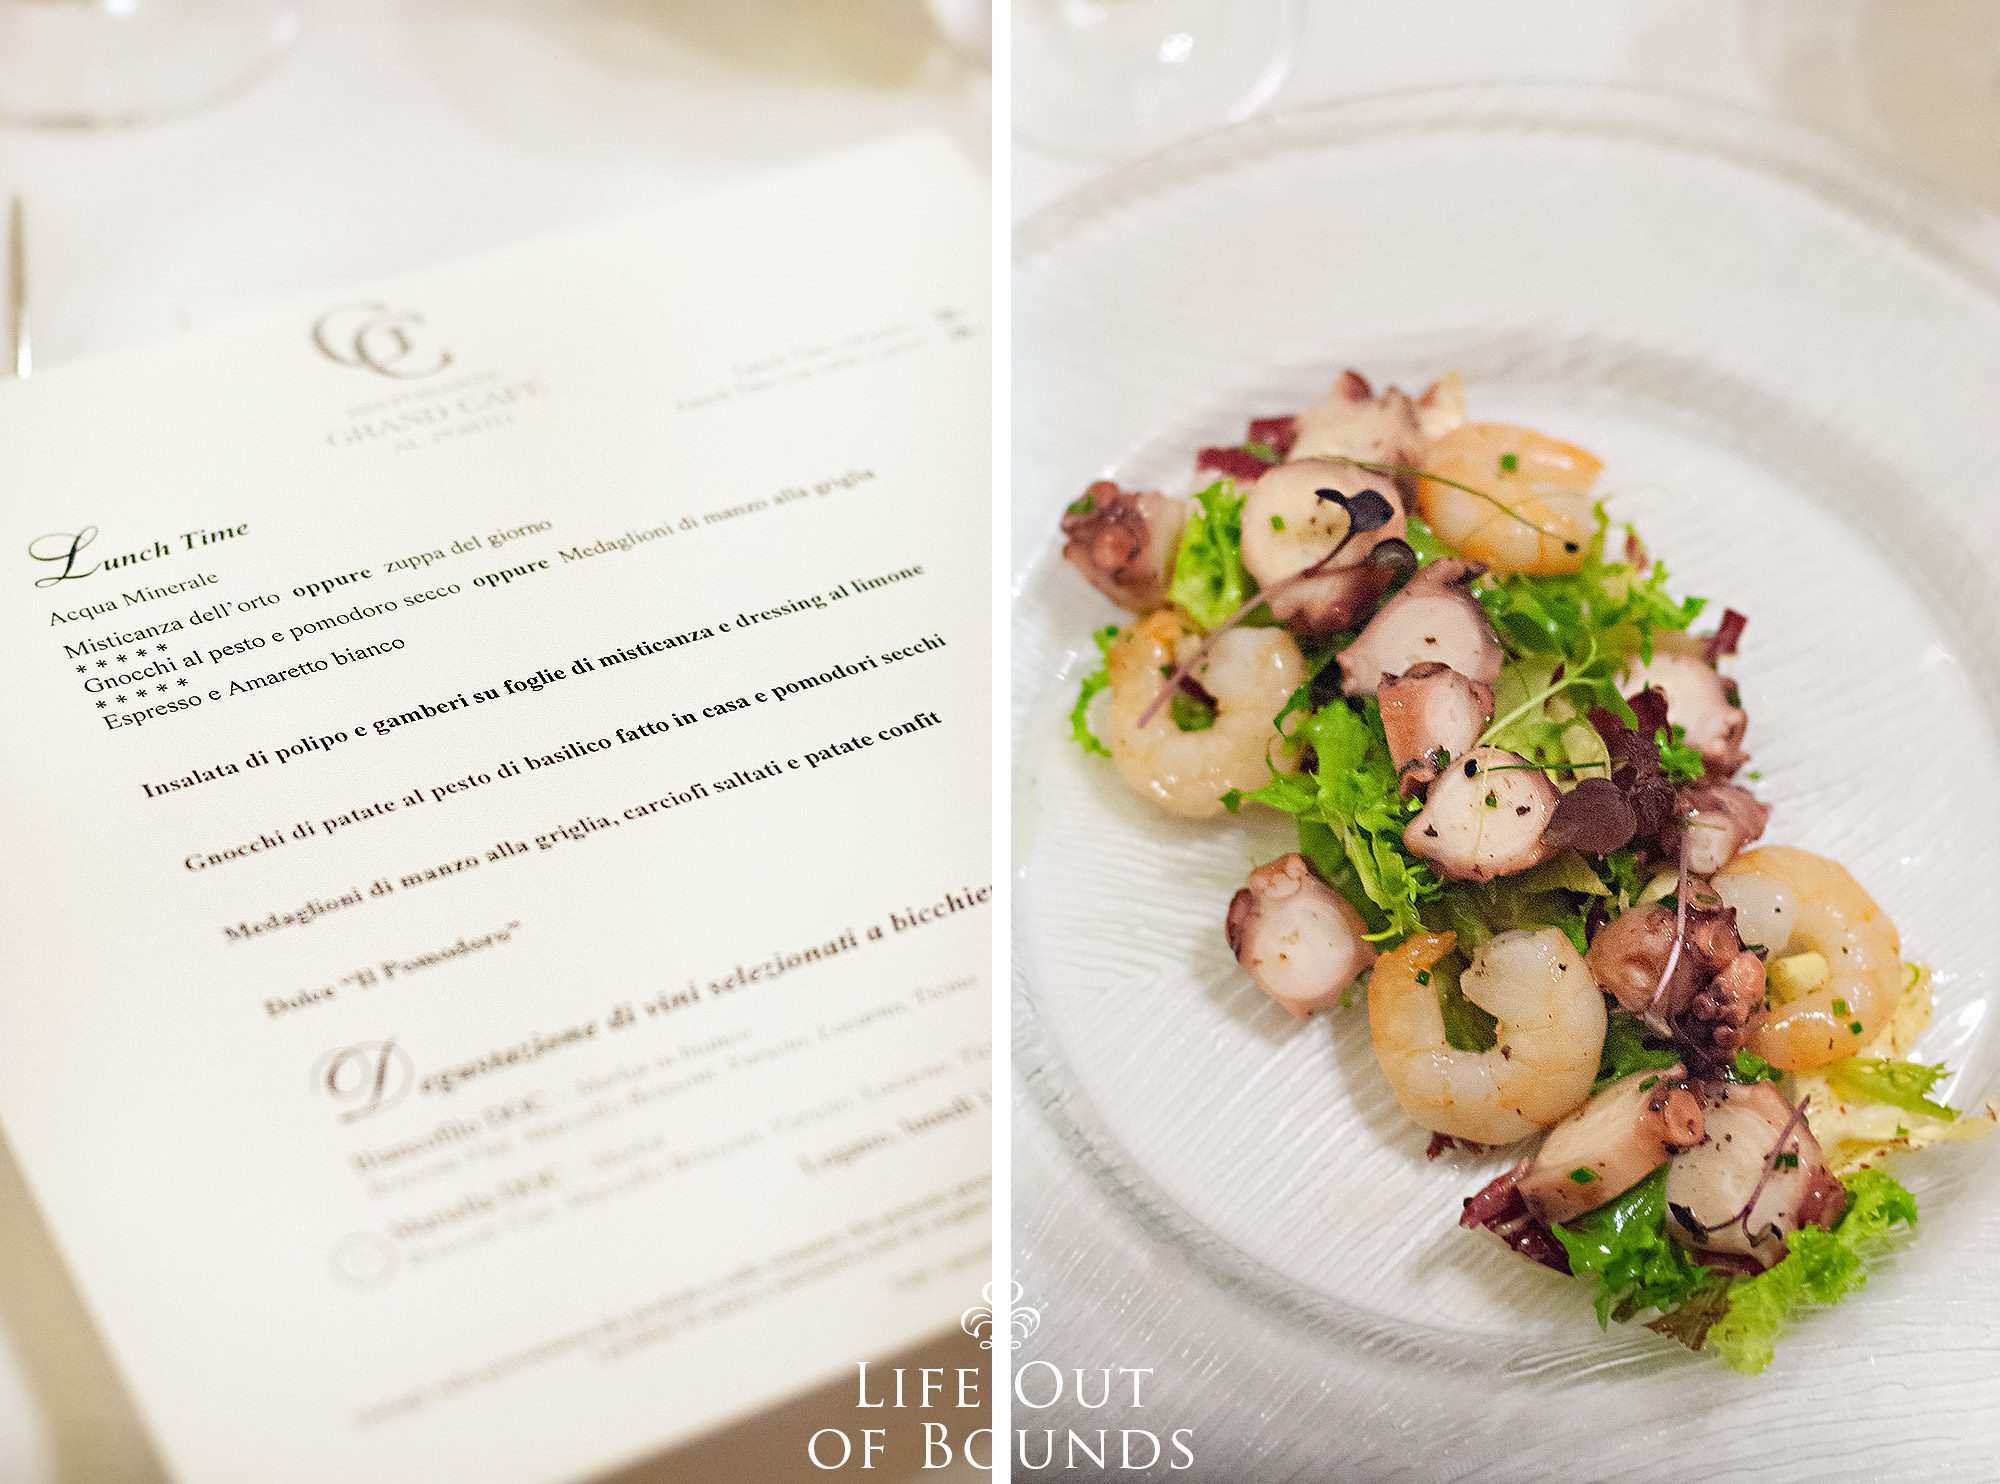 Menu-and-Octopus-and-Shrimp-Salad-for-lunch-at-Ristorante-Grand-Cafe-Al-Porto-in-Lugano-Switzerland